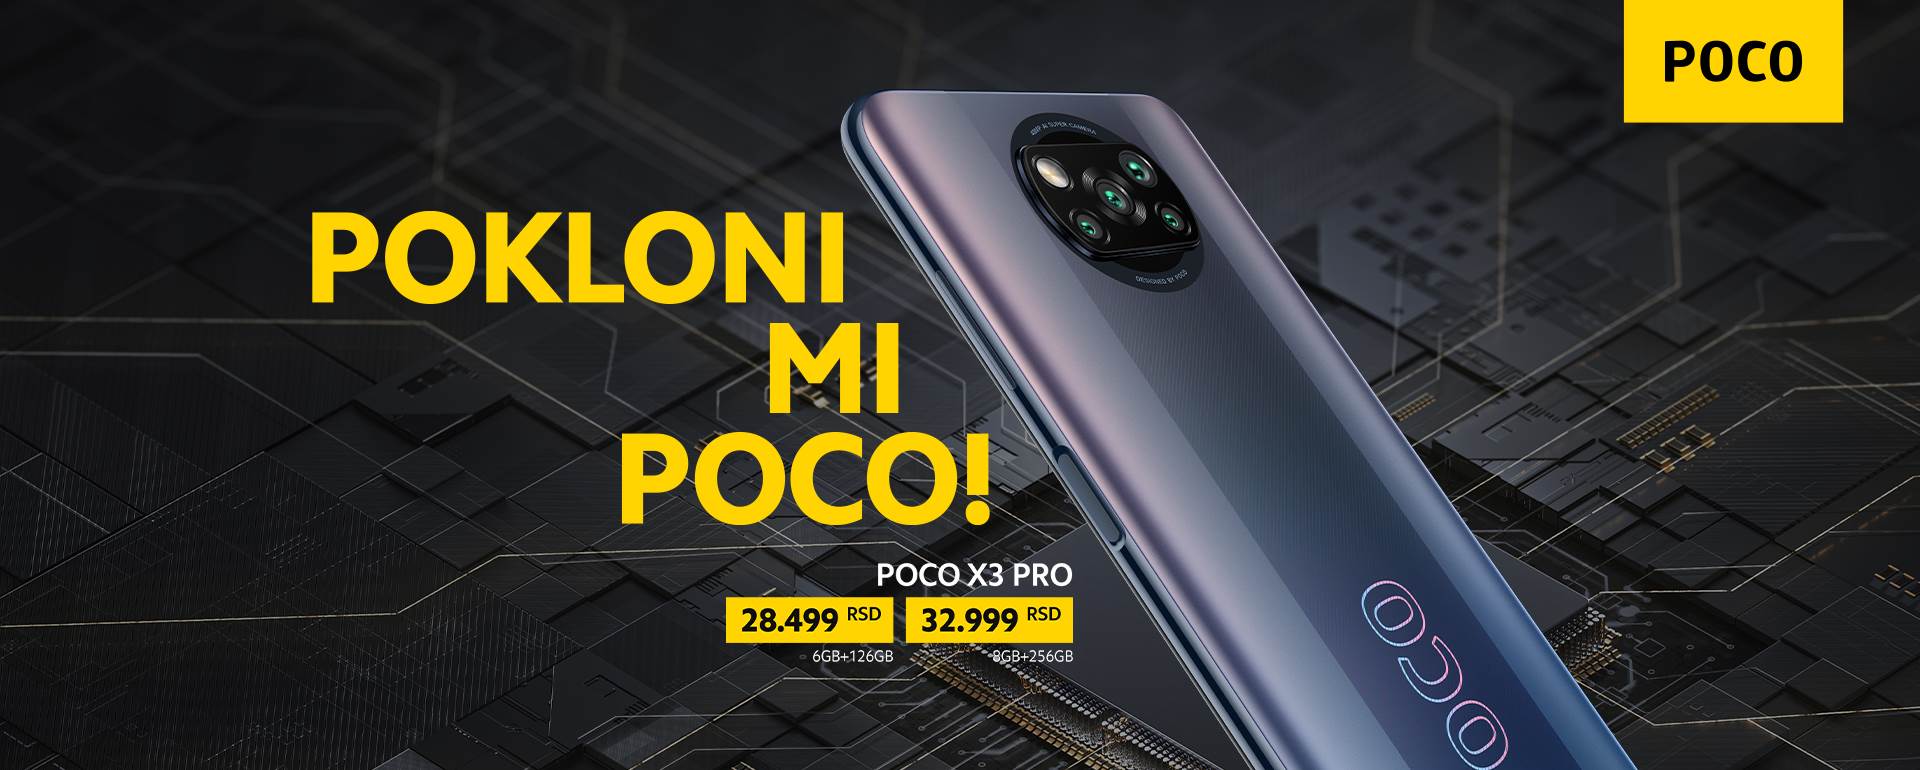 POCO X3 Pro promocija u Srbiji niža cena 